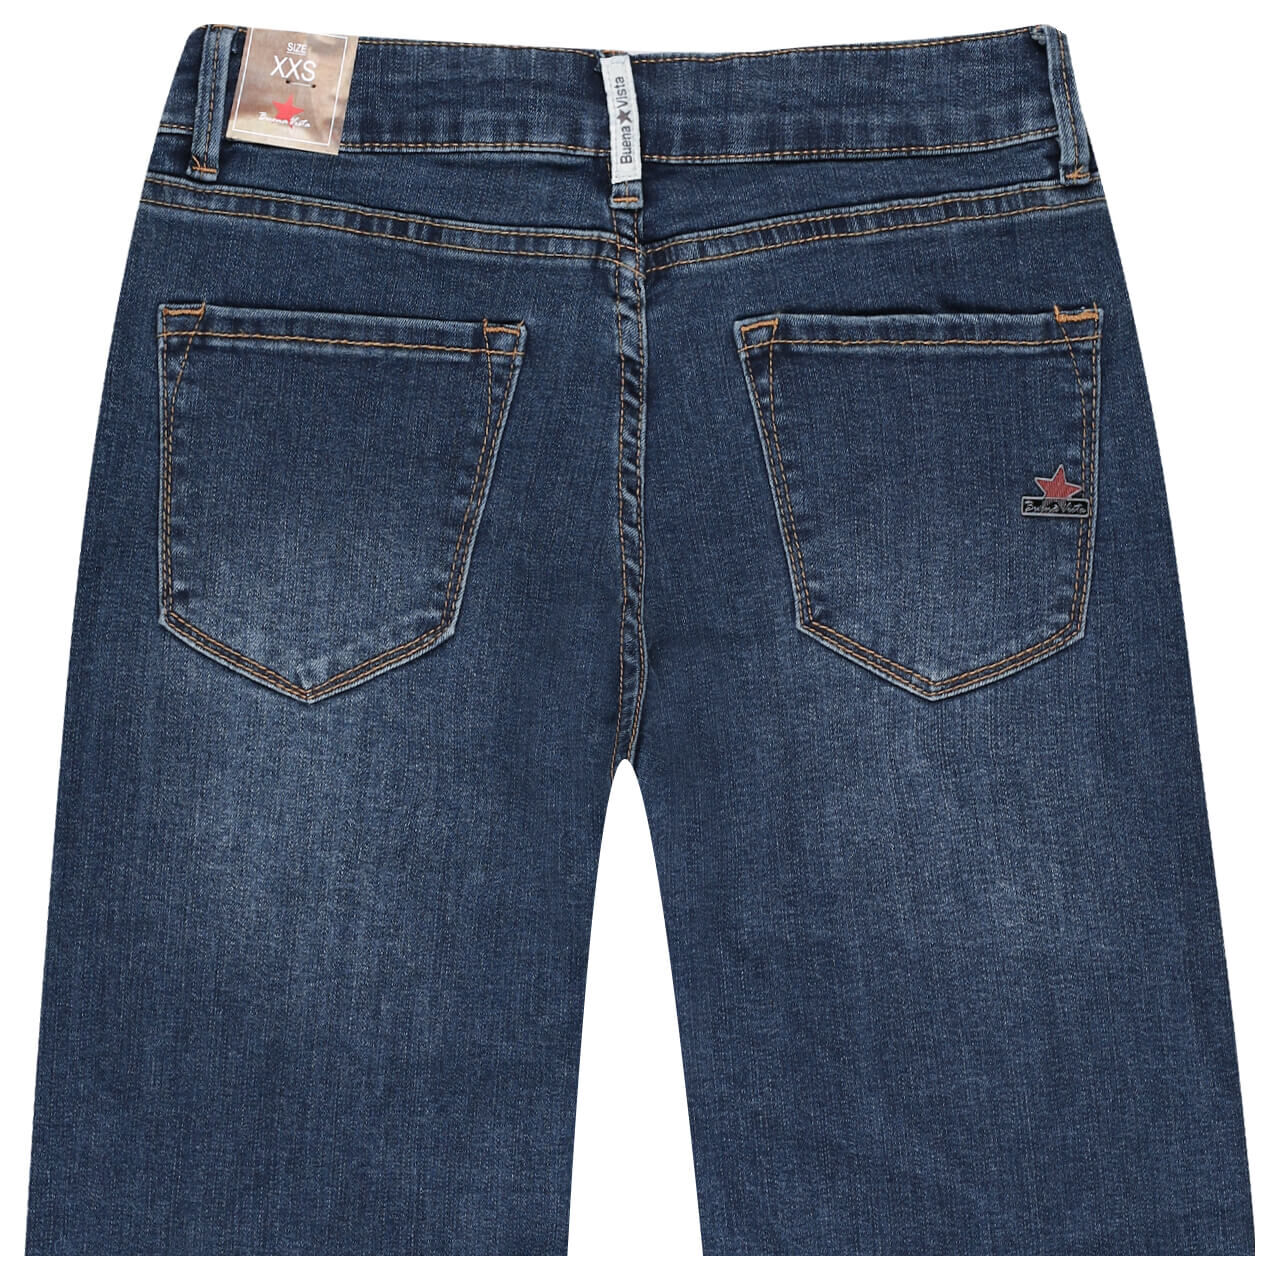 Buena Vista Italy-Short Stretch Denim Jeans mid blue